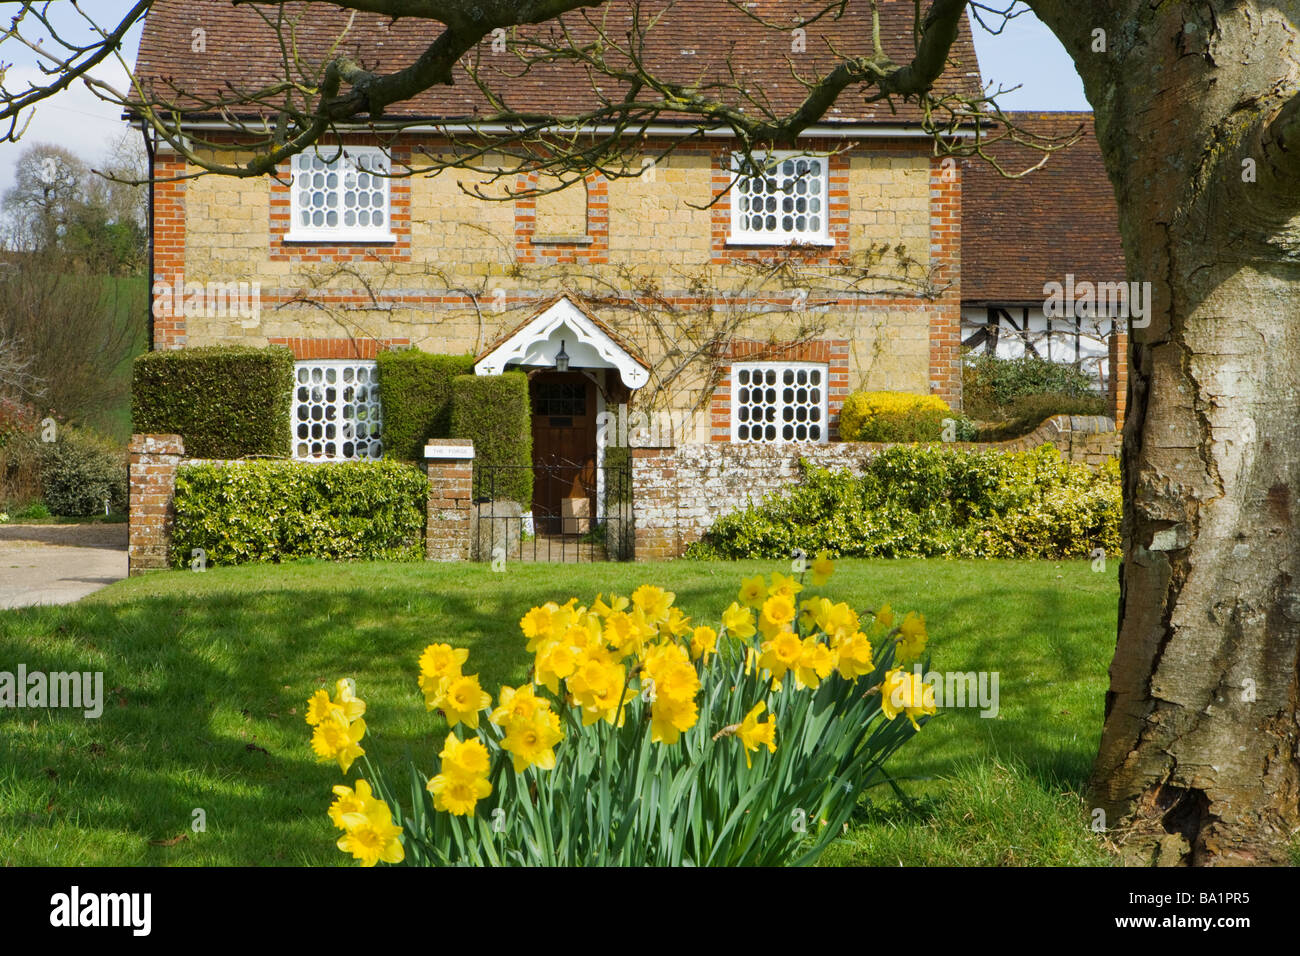 Cottage and daffodils. Shamley green, Surrey, UK Stock Photo